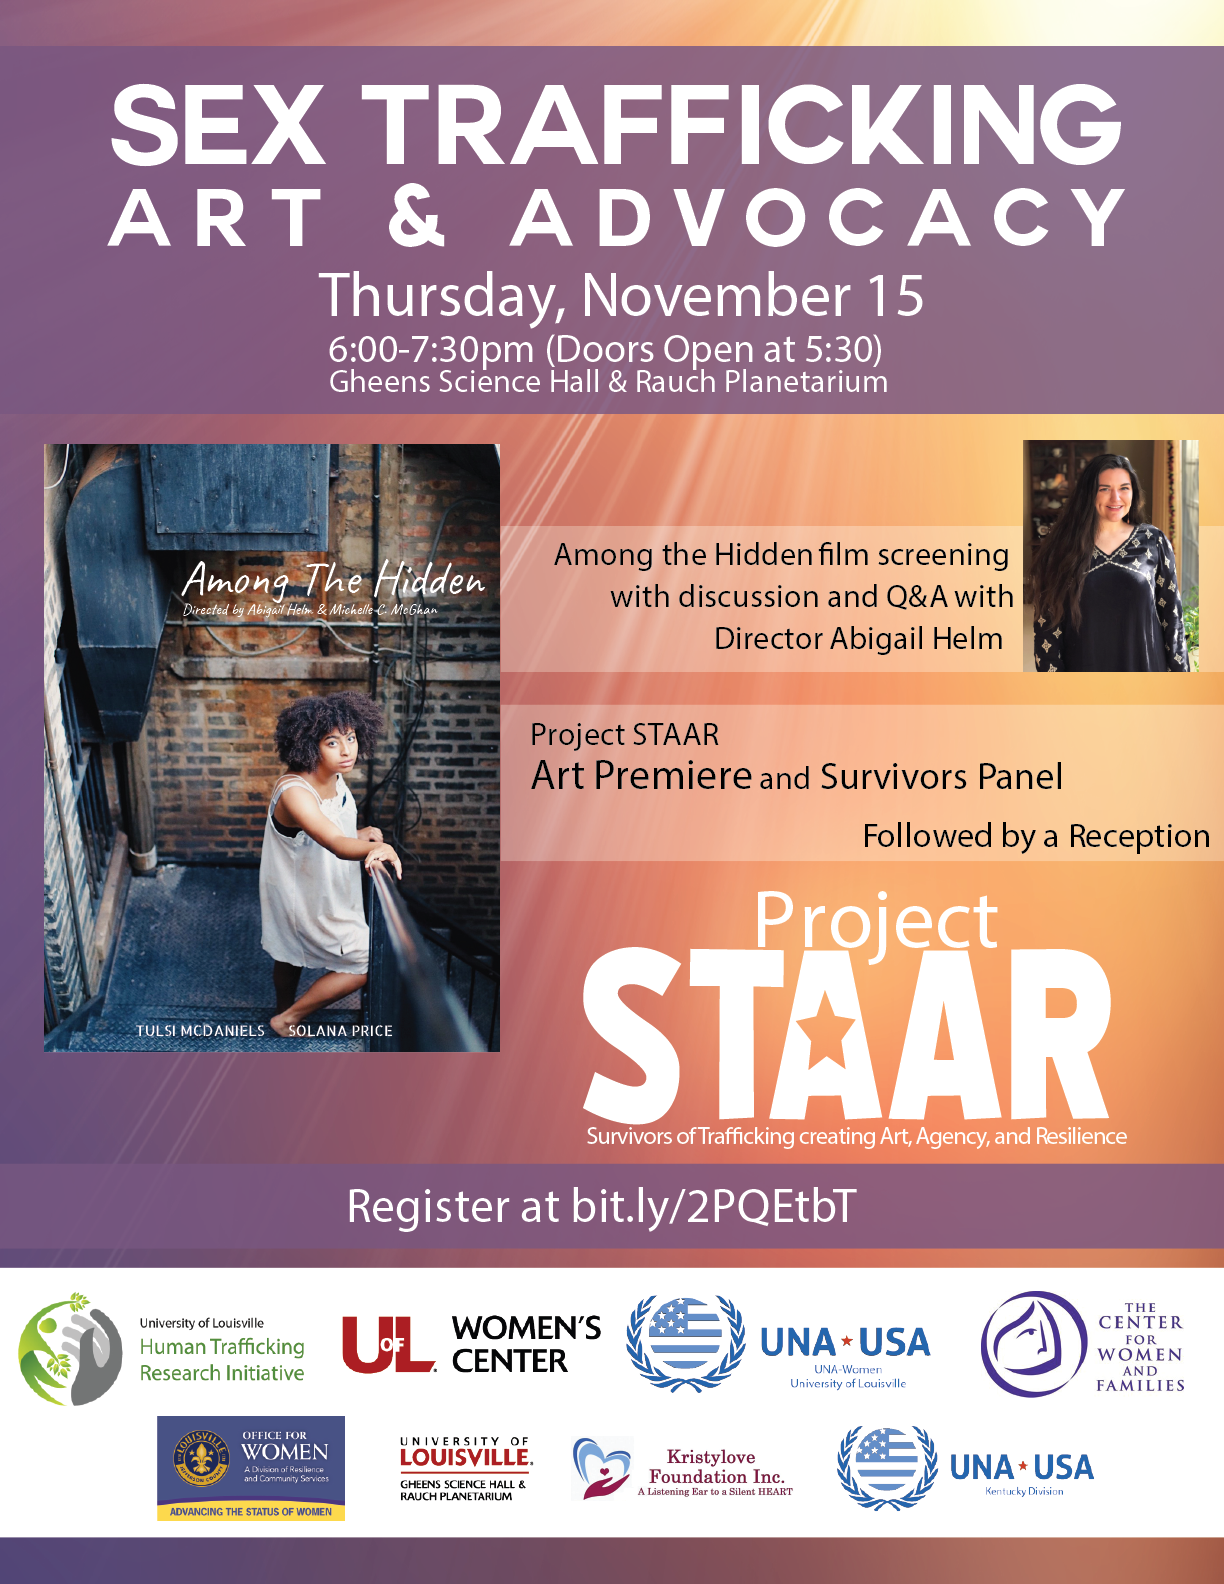 Sex Trafficking, Art & Advocacy to be held Nov. 15